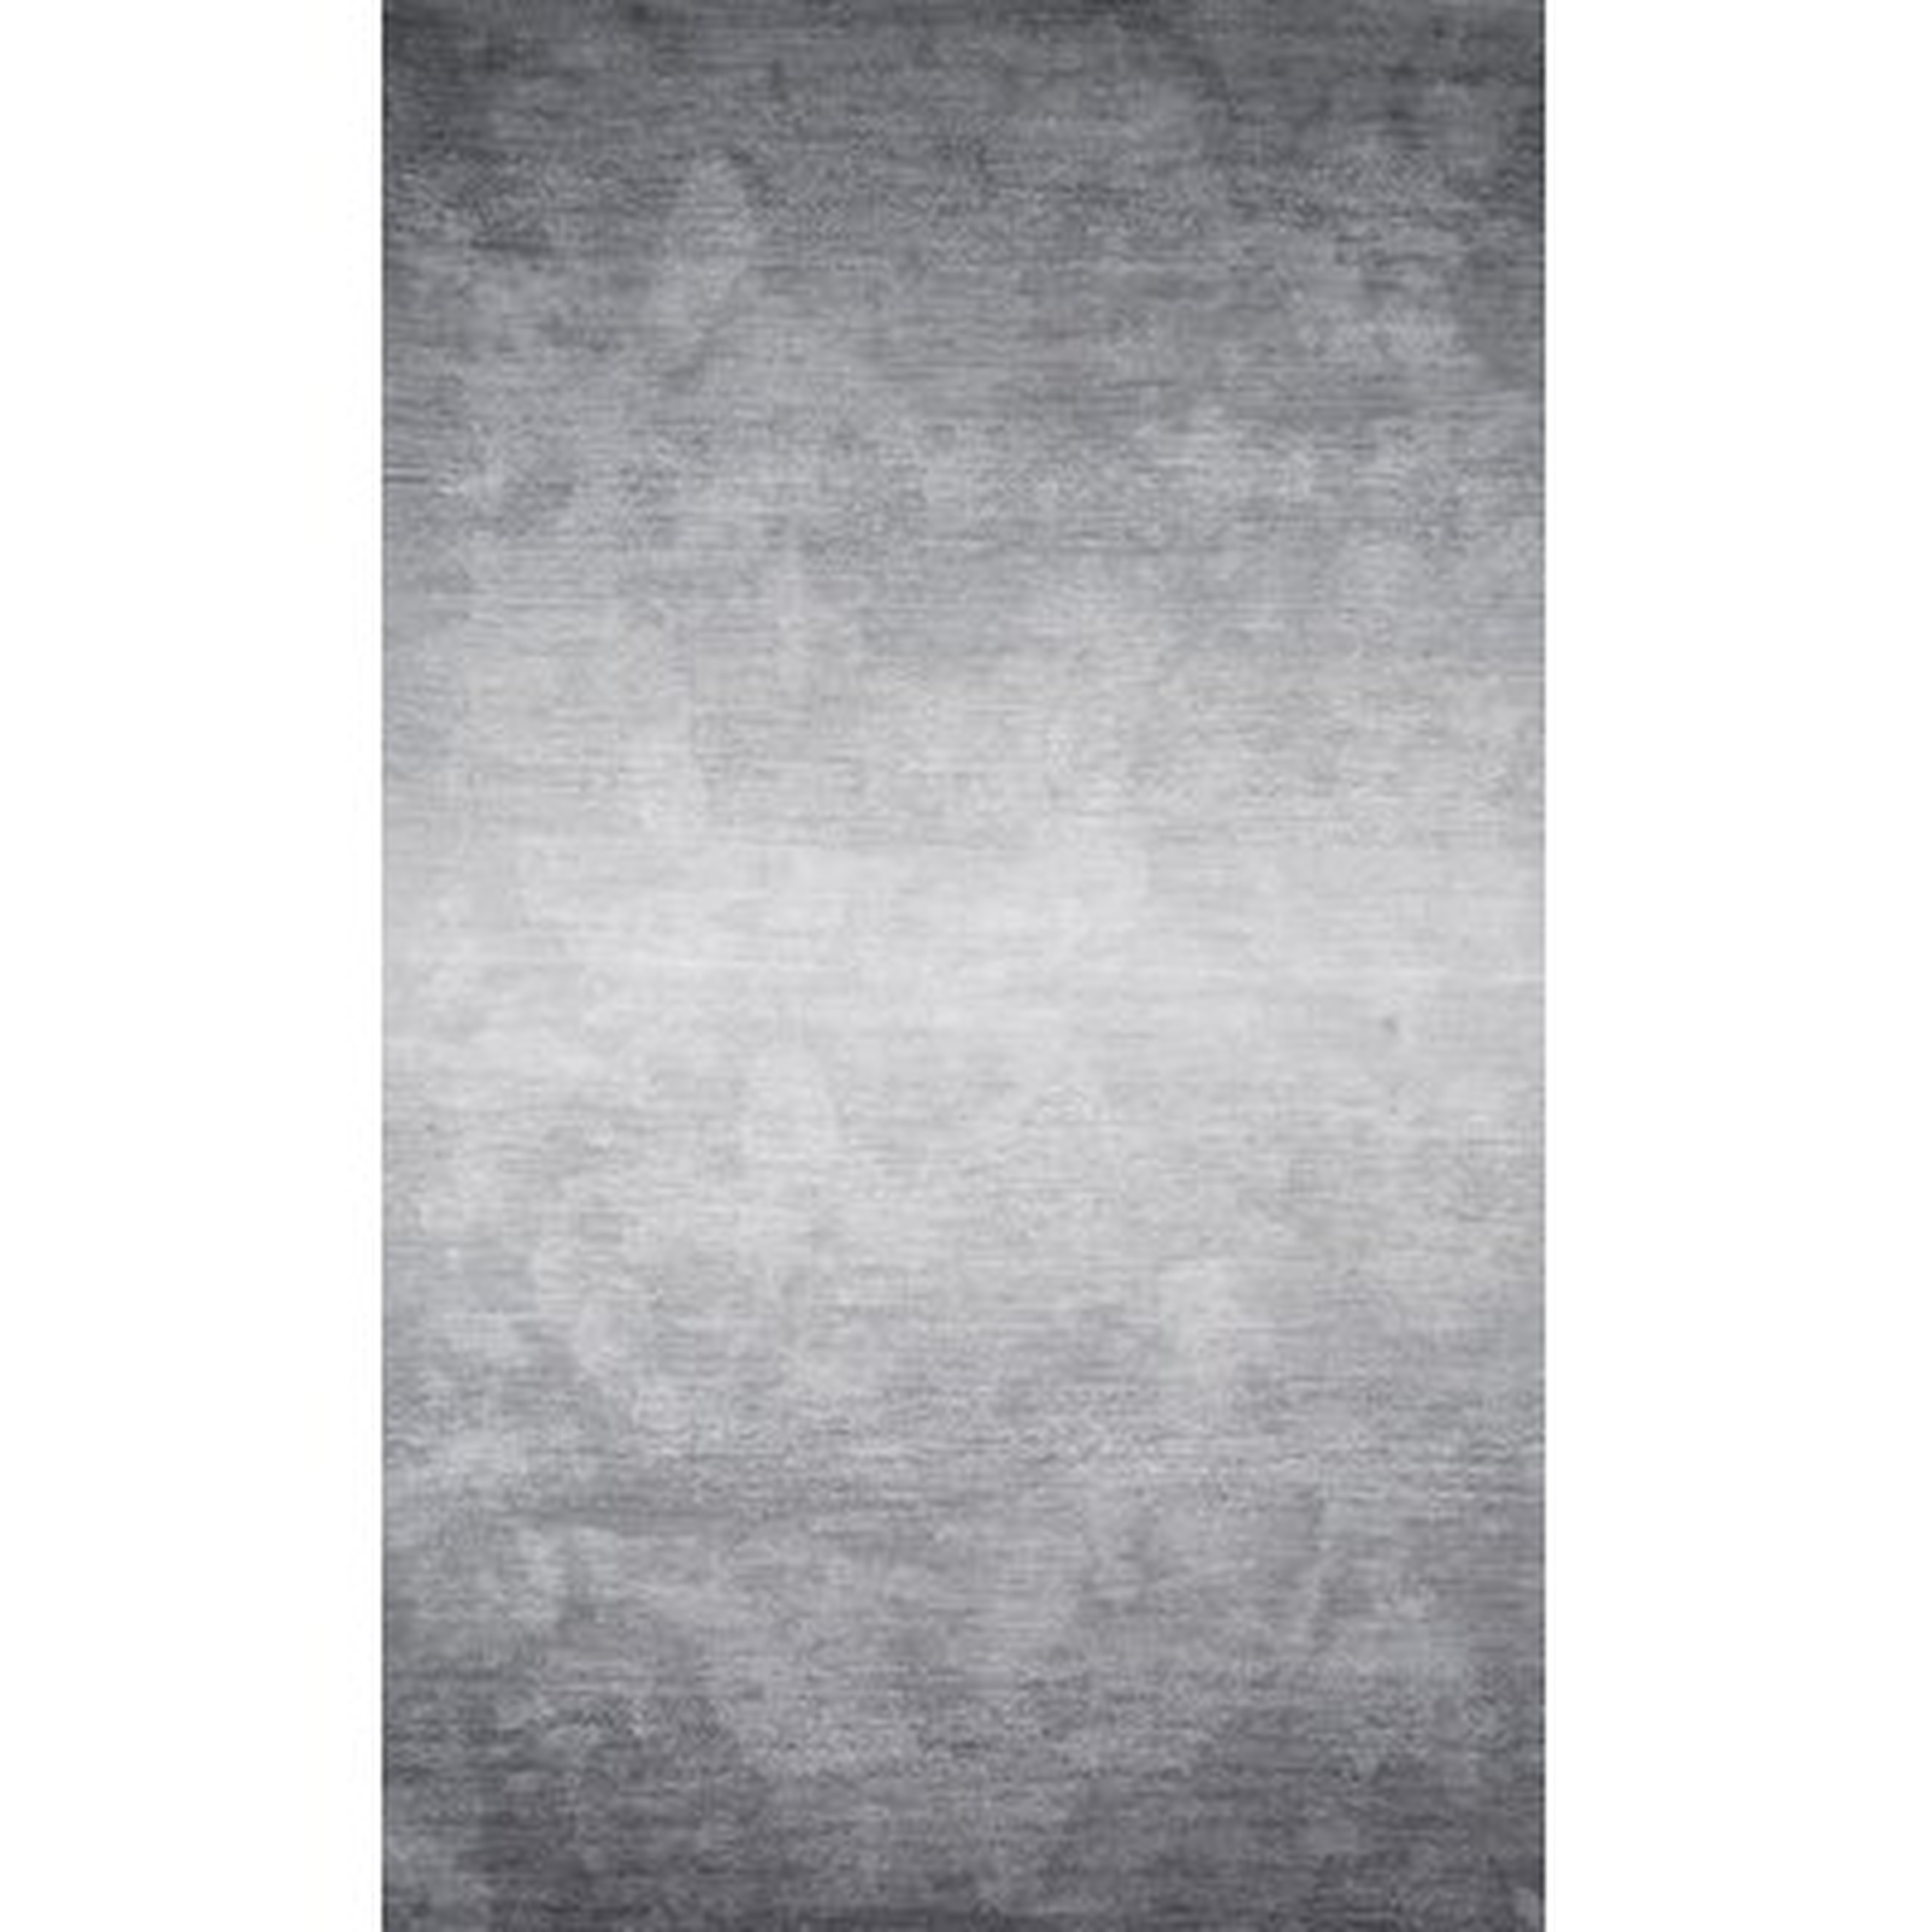 Deskins Hand-Tufted Gray Area Rug - Wayfair